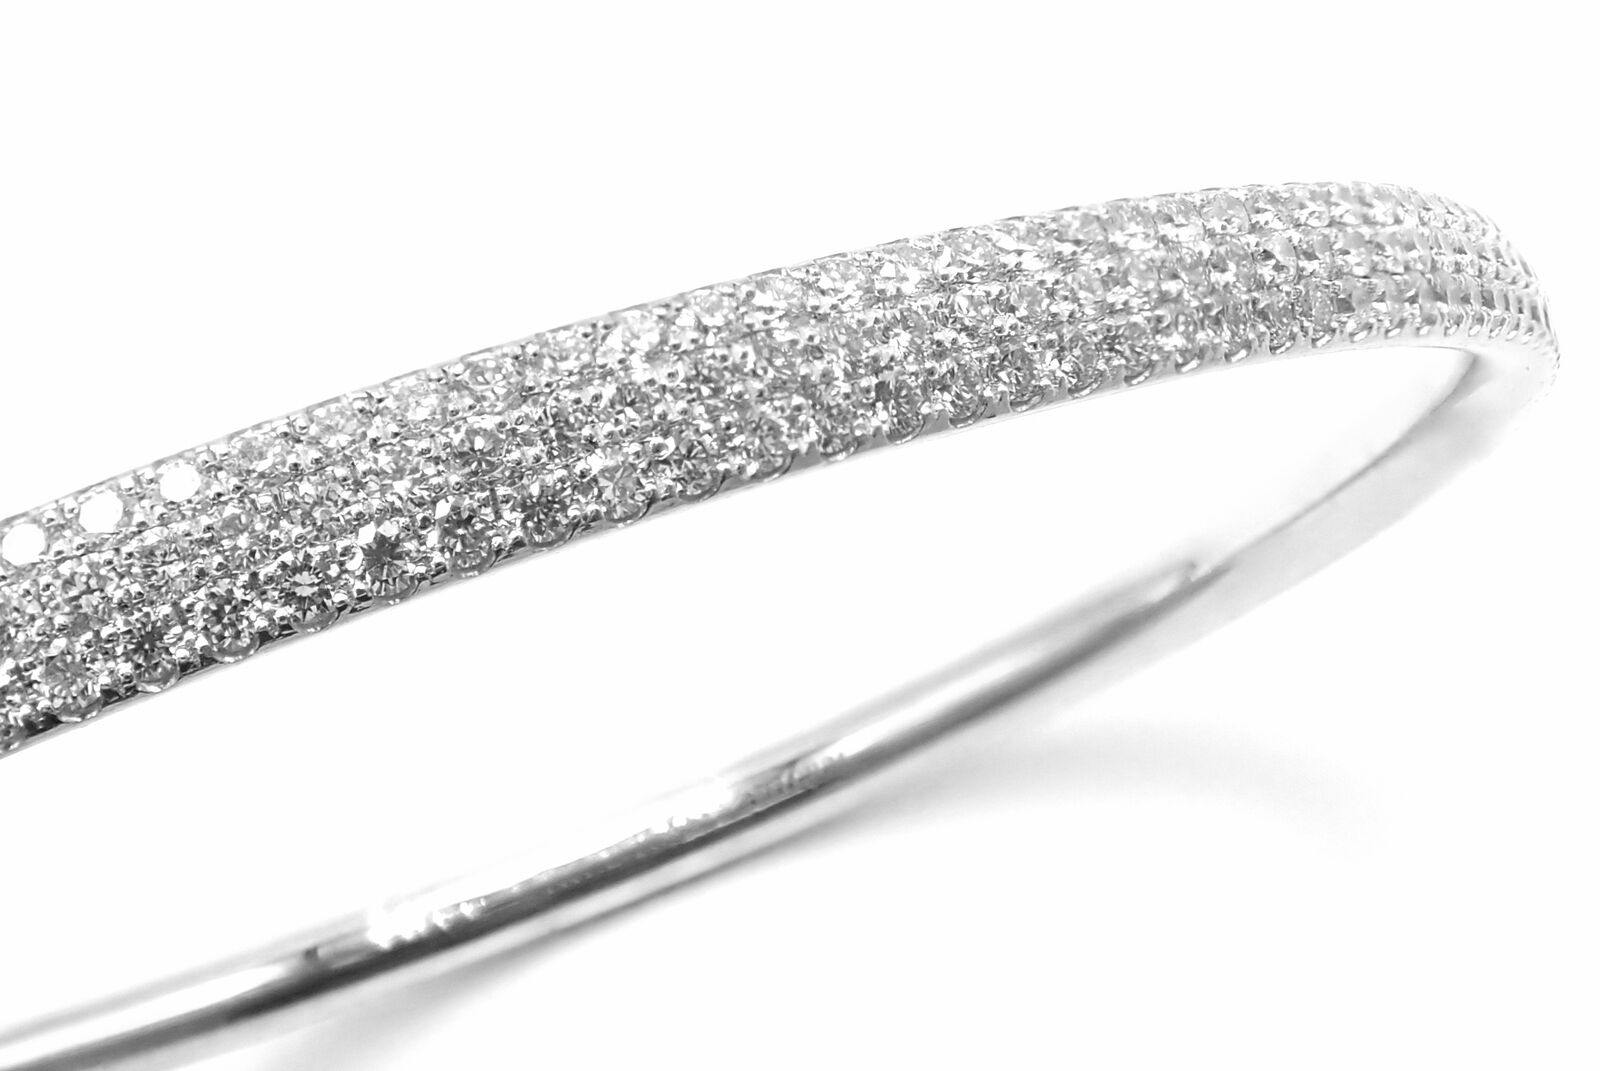 18K White Gold 'Tiffany & Co.' Bangle Bracelet With Diamond Flower